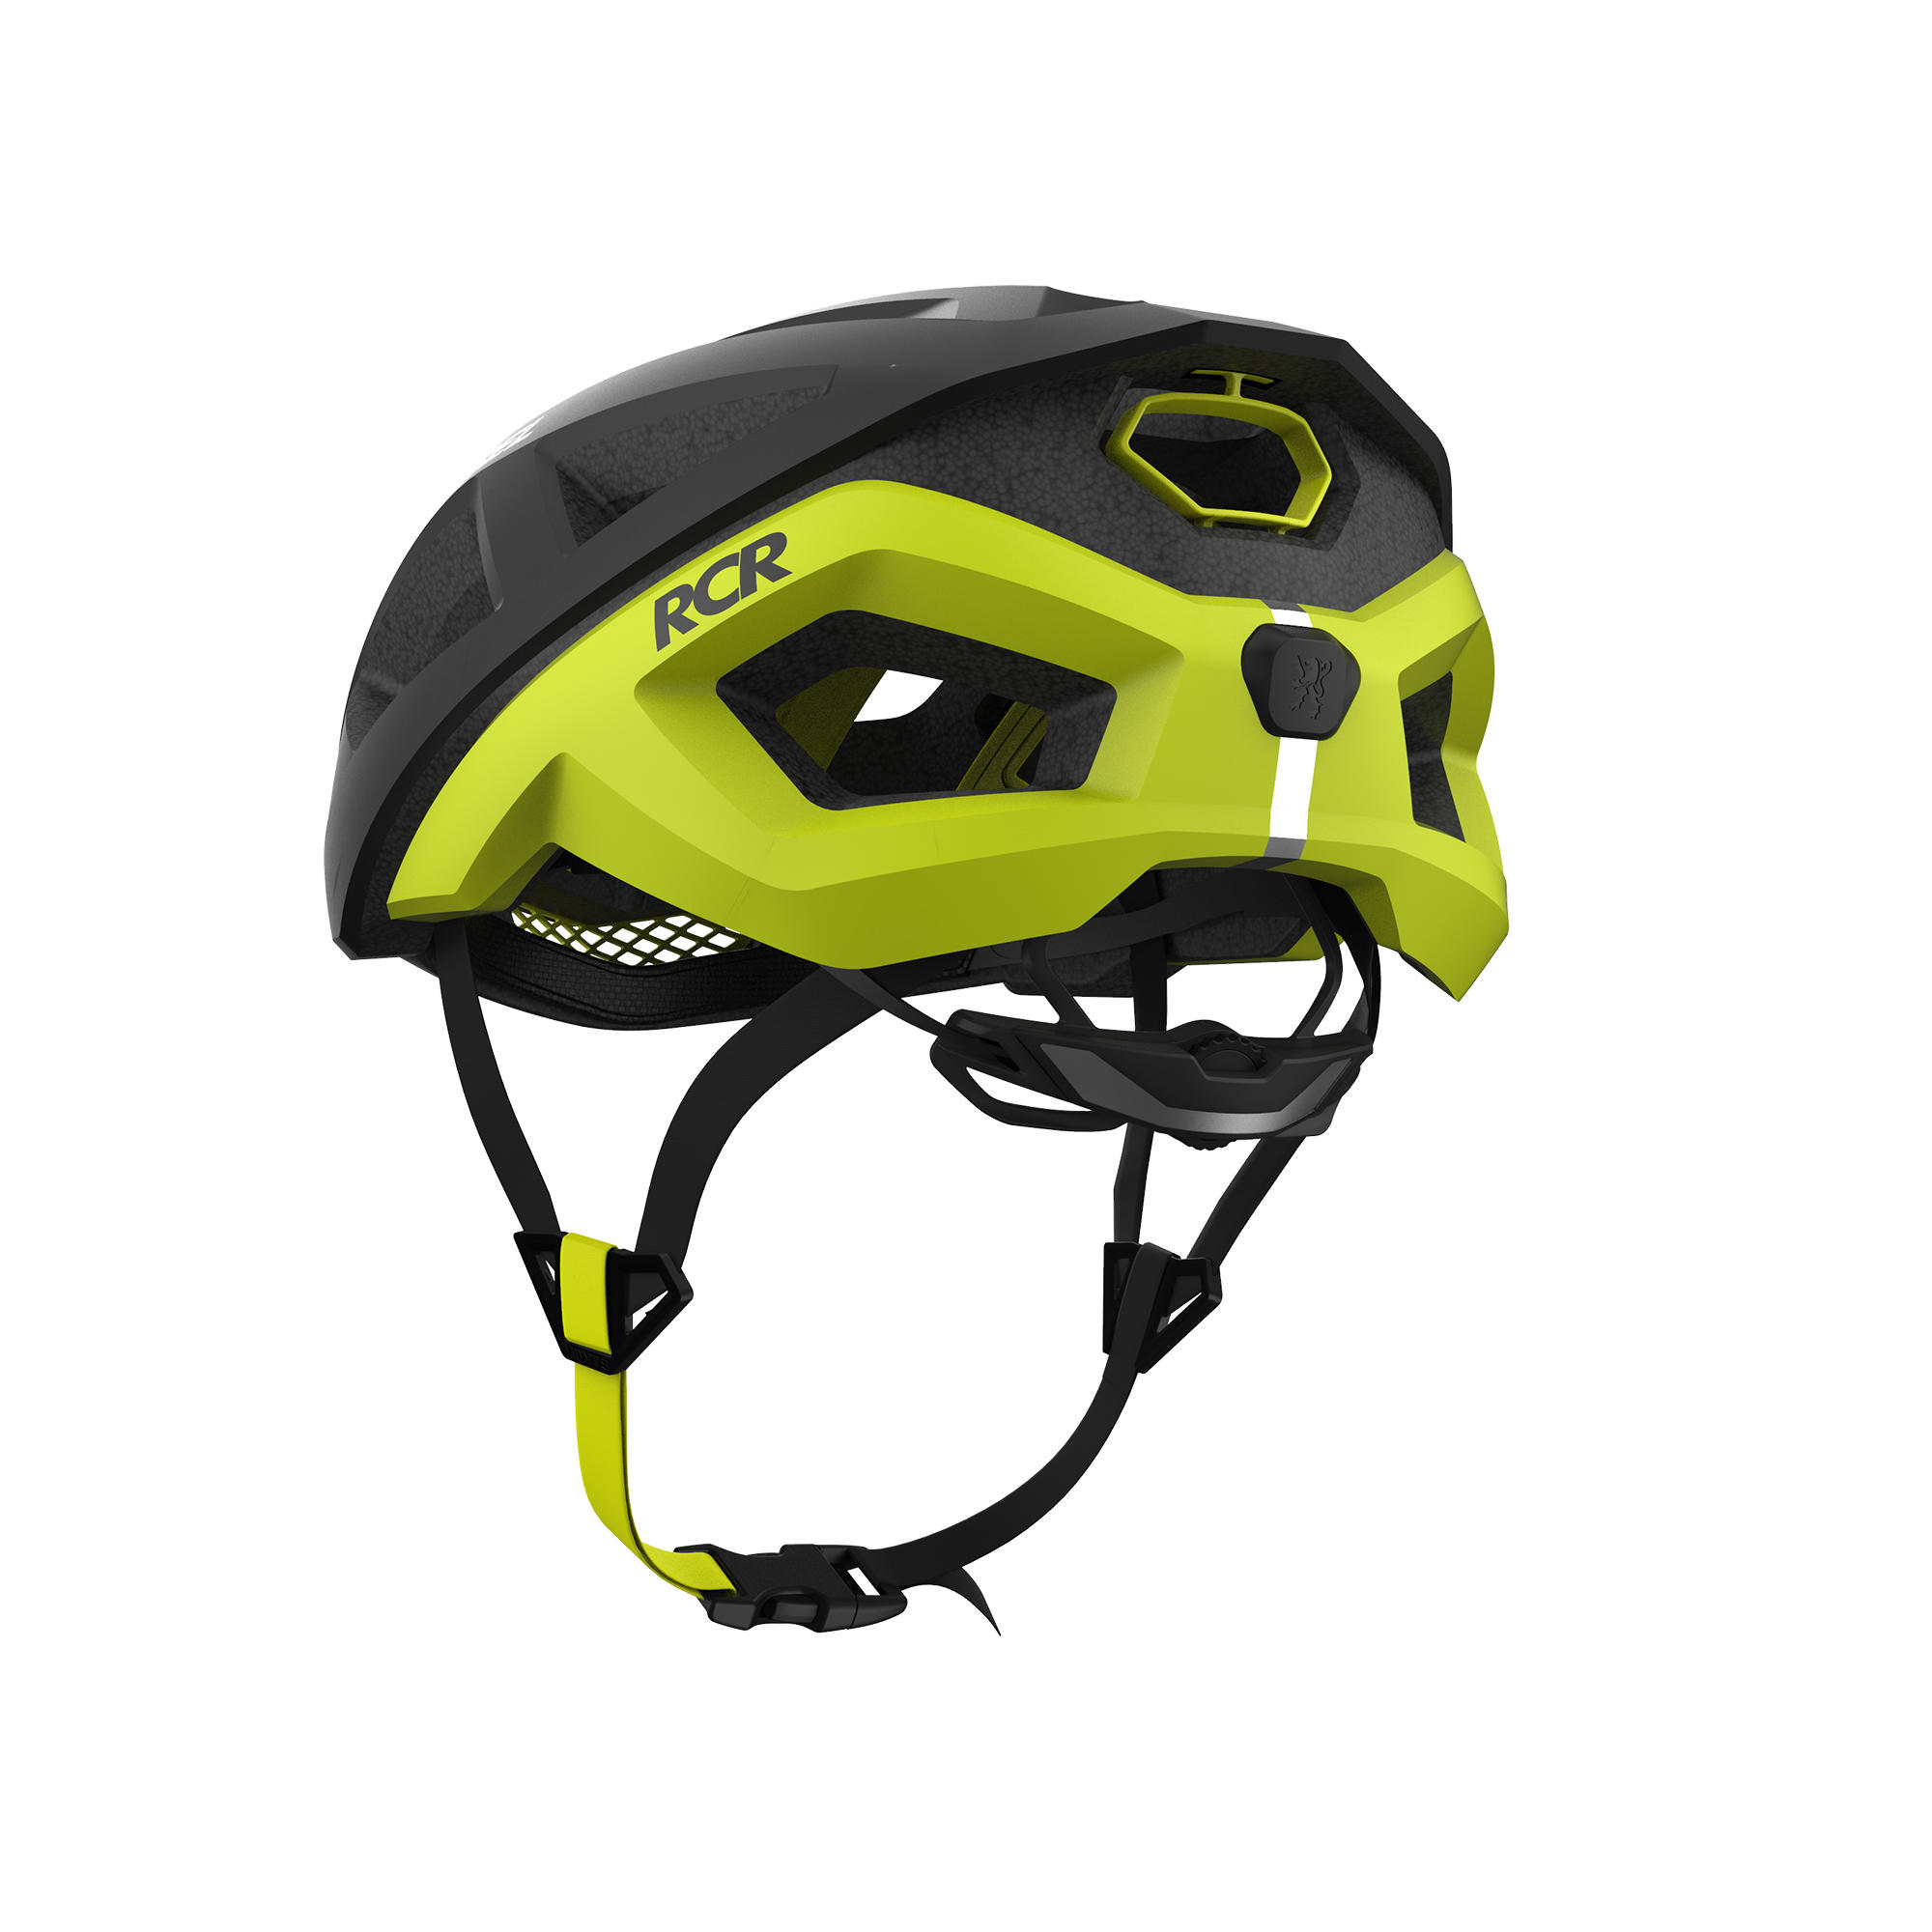 Road Cycling Helmet Aerofit 900 - Black/Yellow 2/12